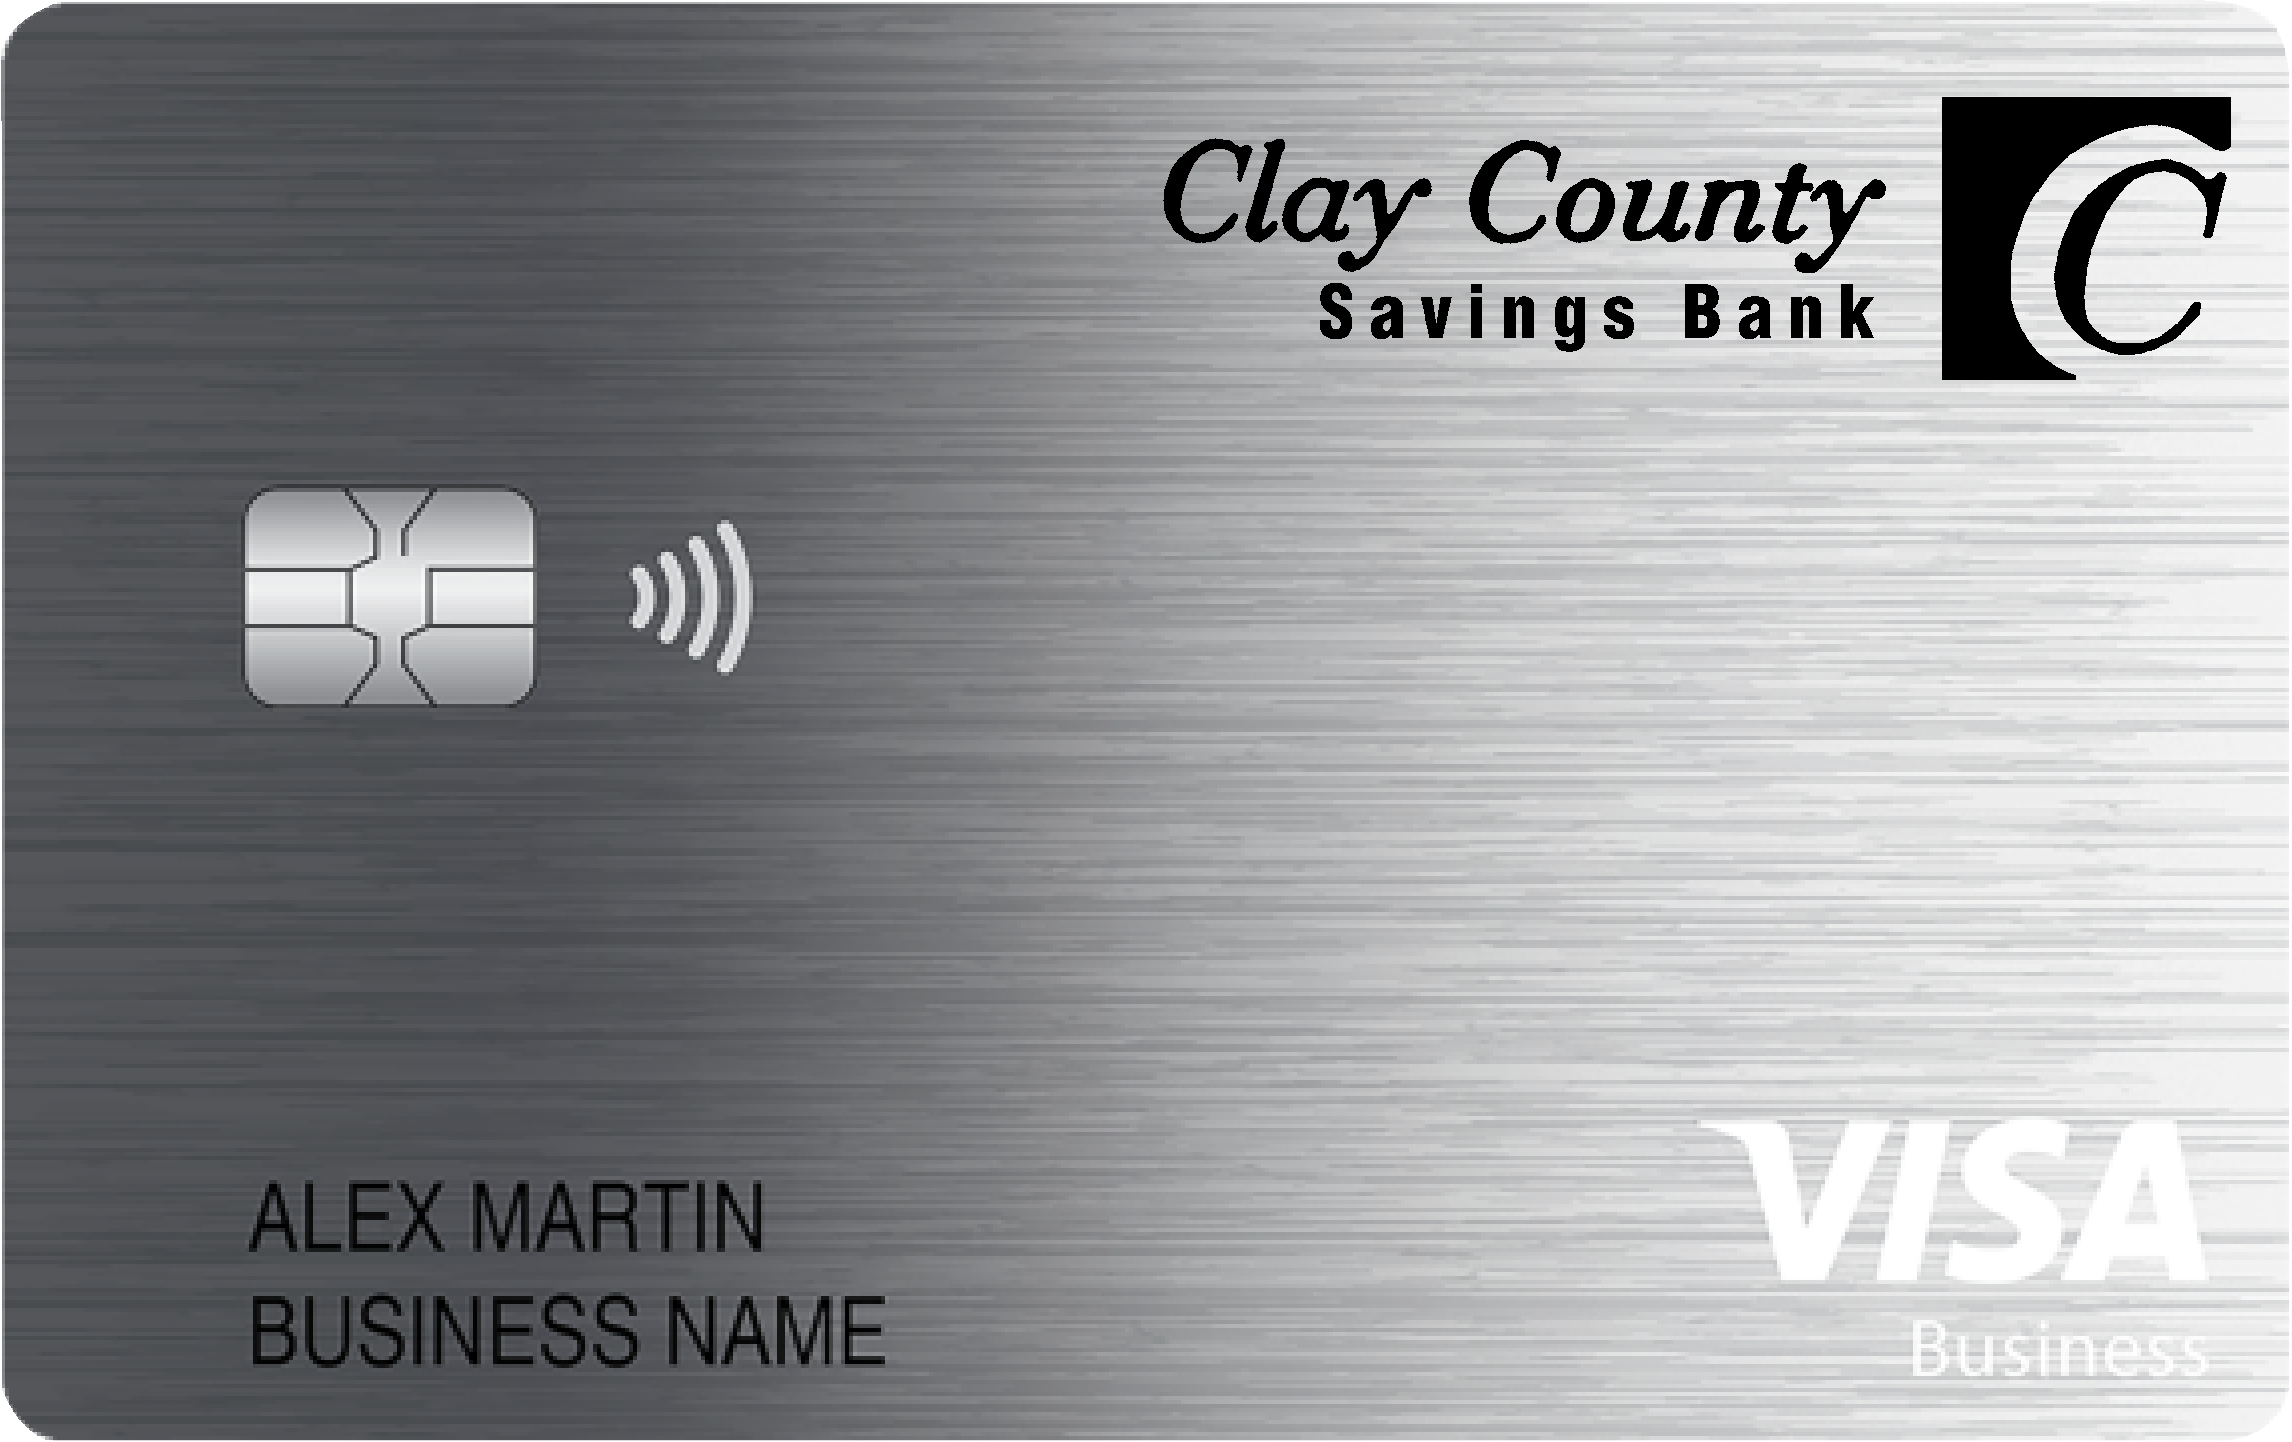 Clay County Savings Bank Business Cash Preferred Card